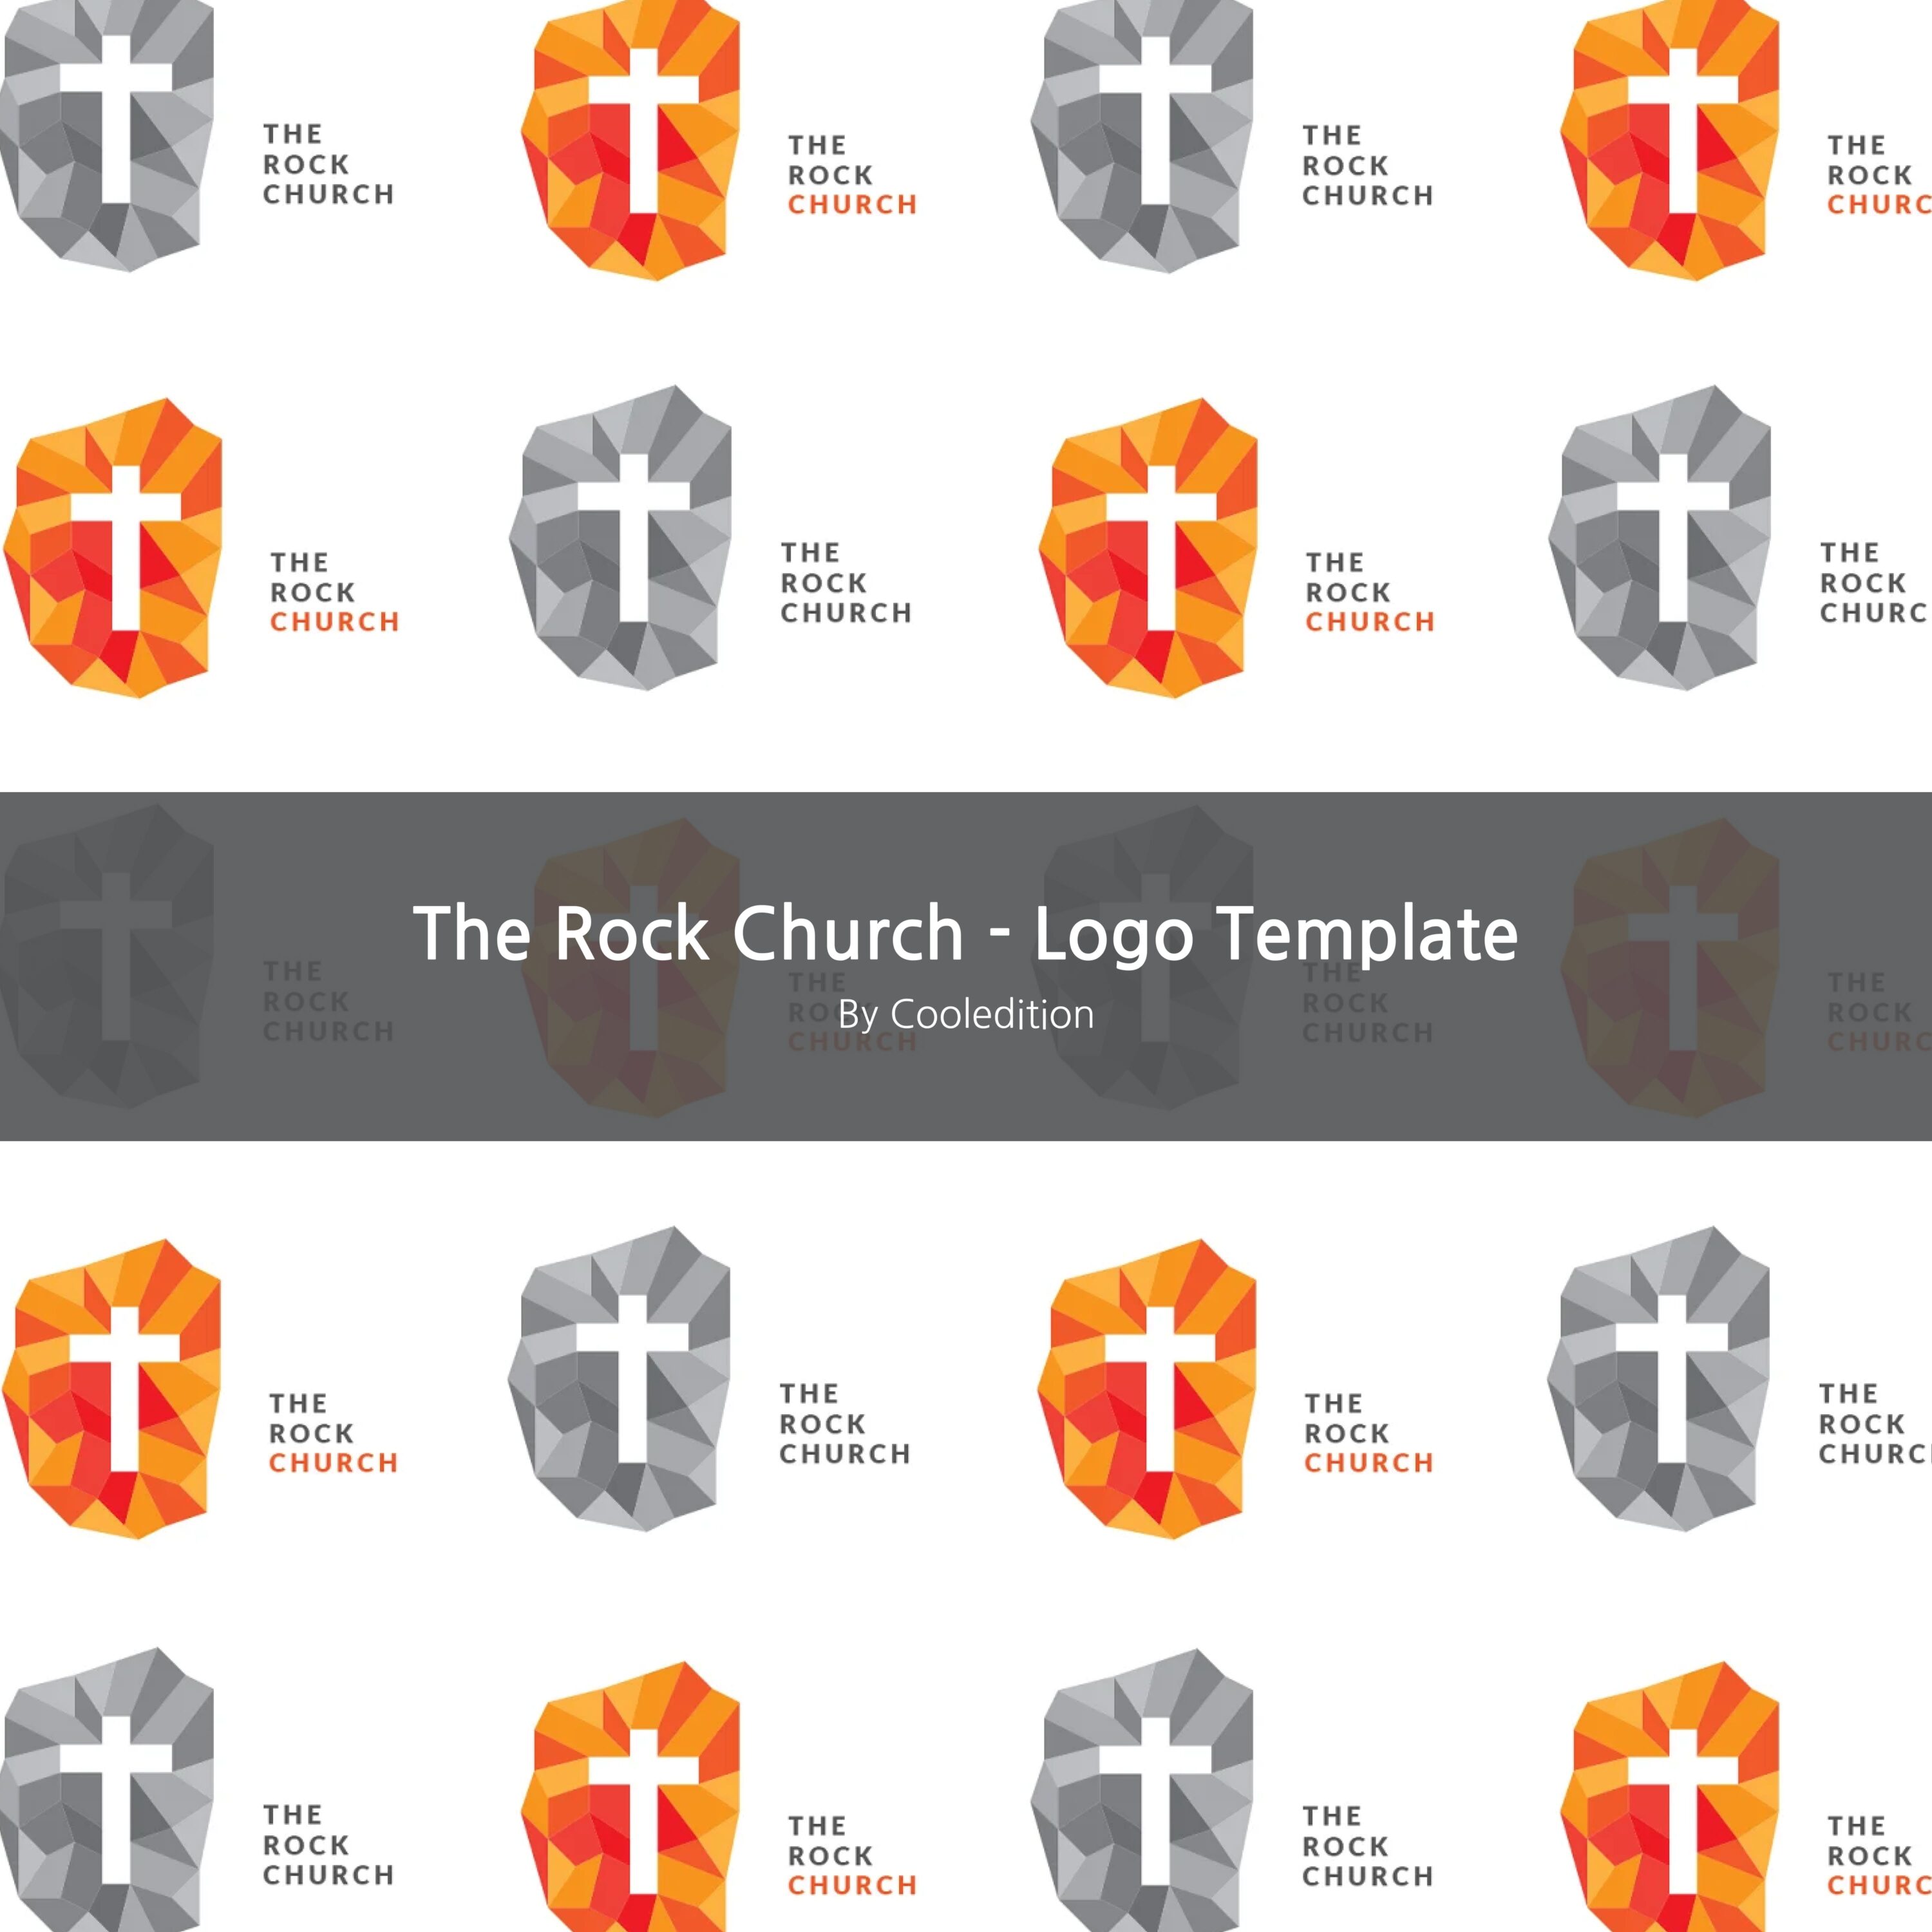 The Rock Church - Logo Template.